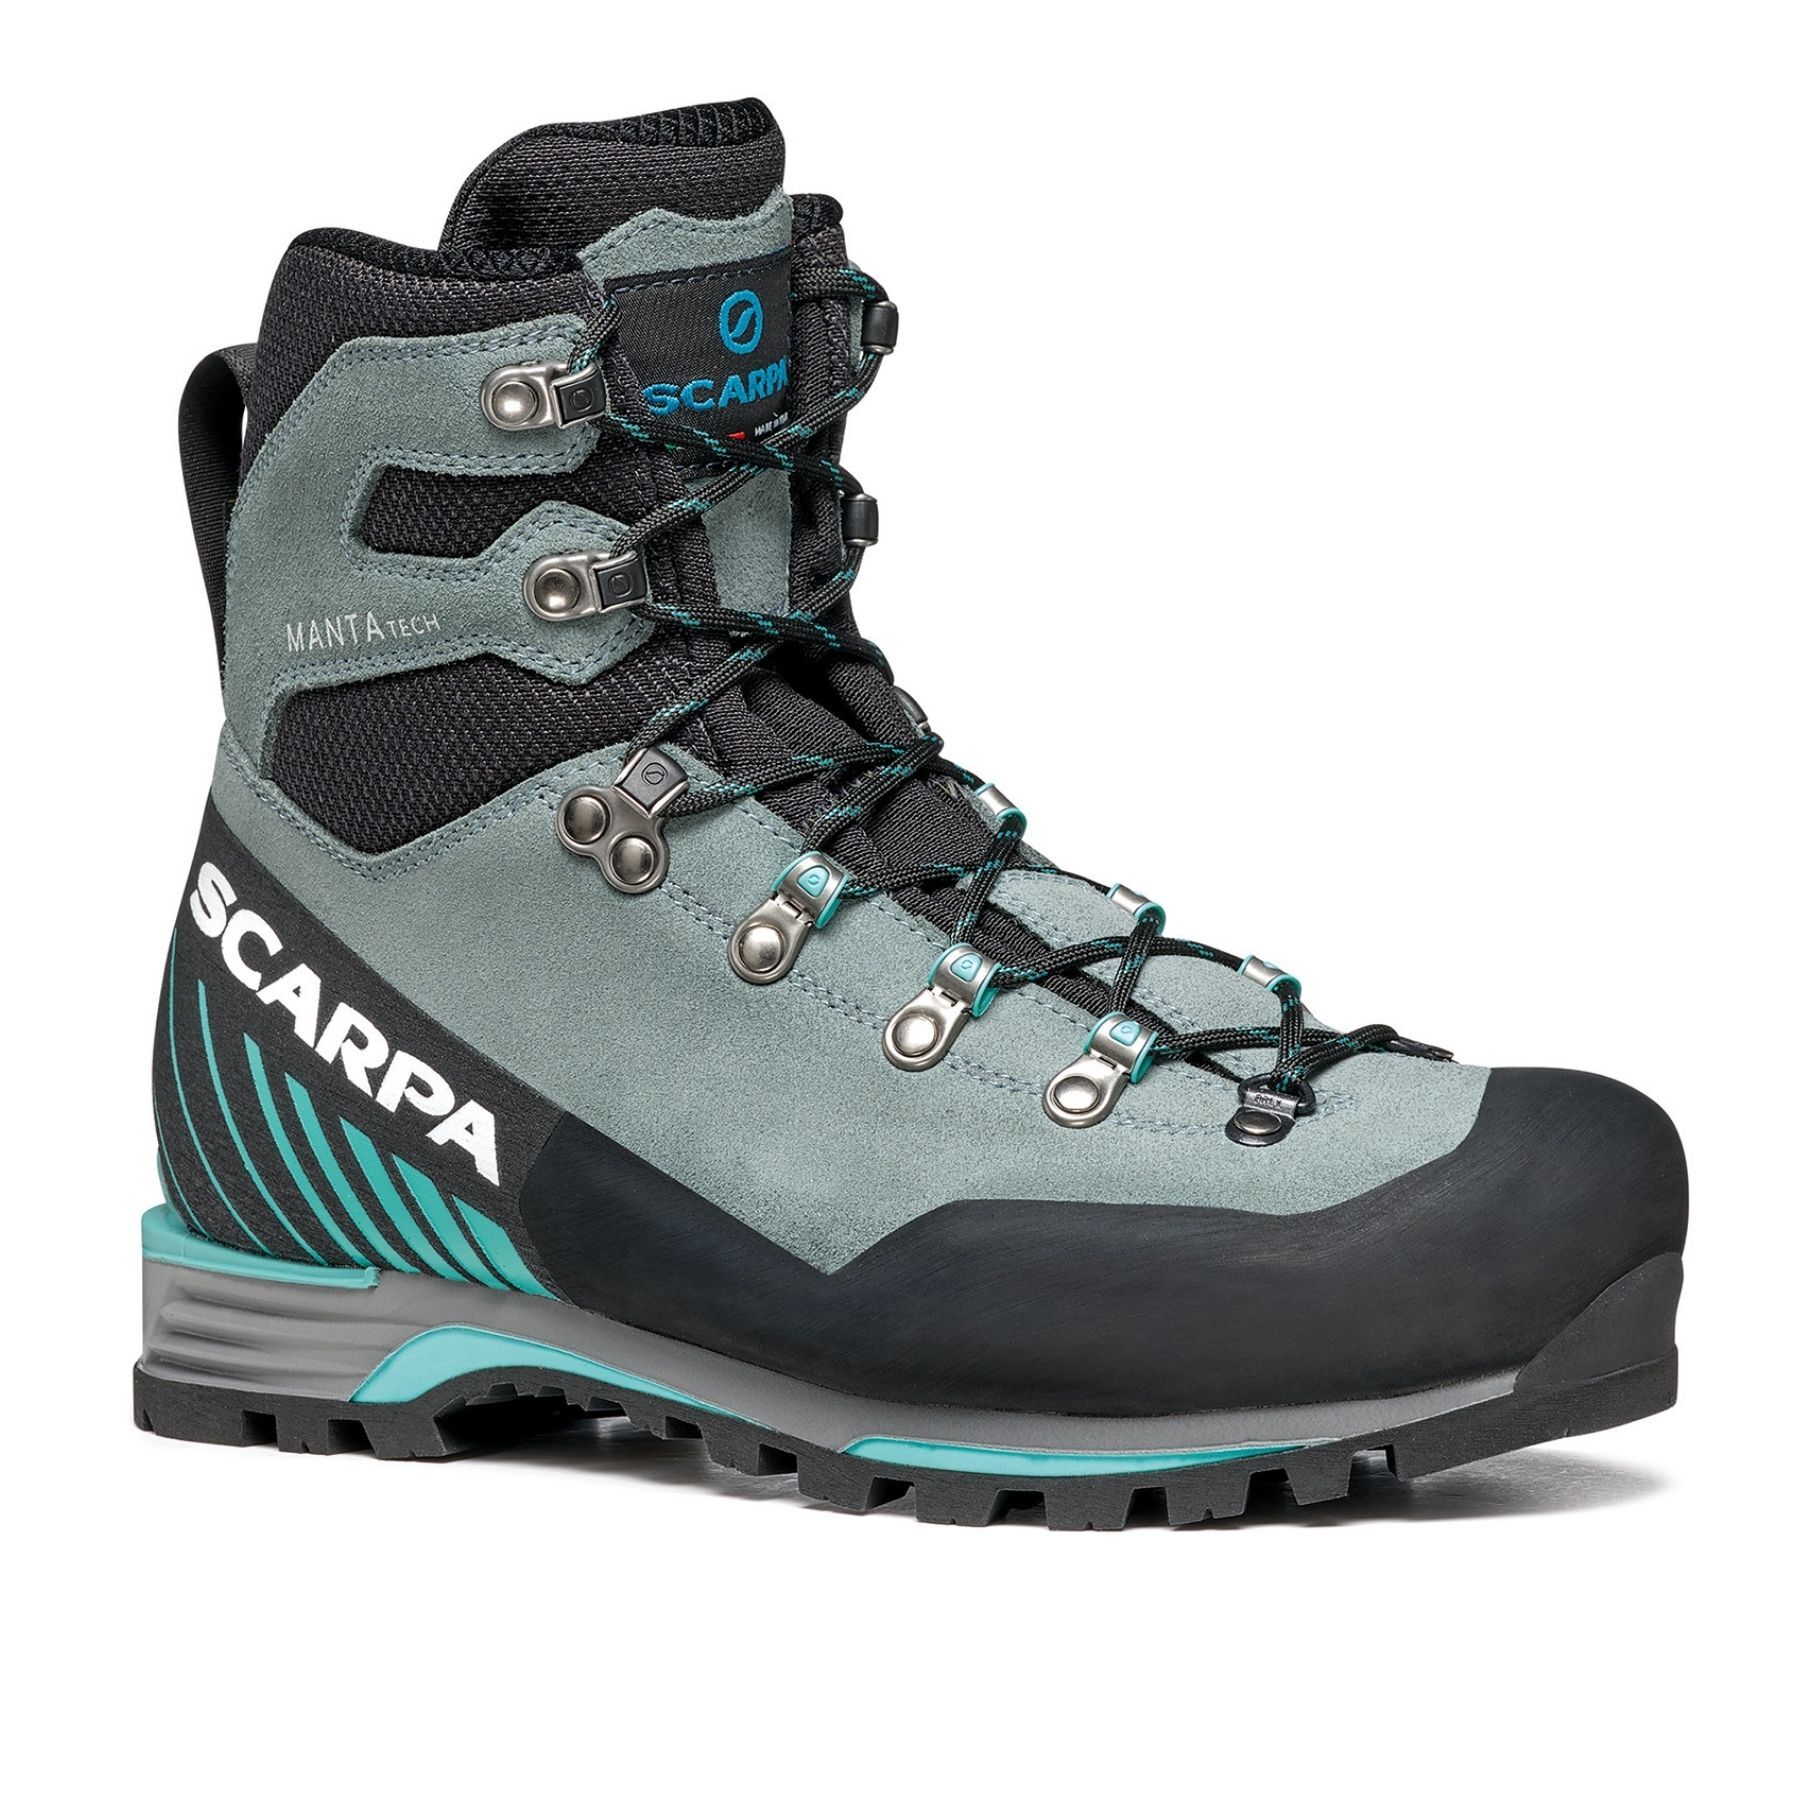 Scarpa Manta Tech GTX - Mountaineering boots - Women's